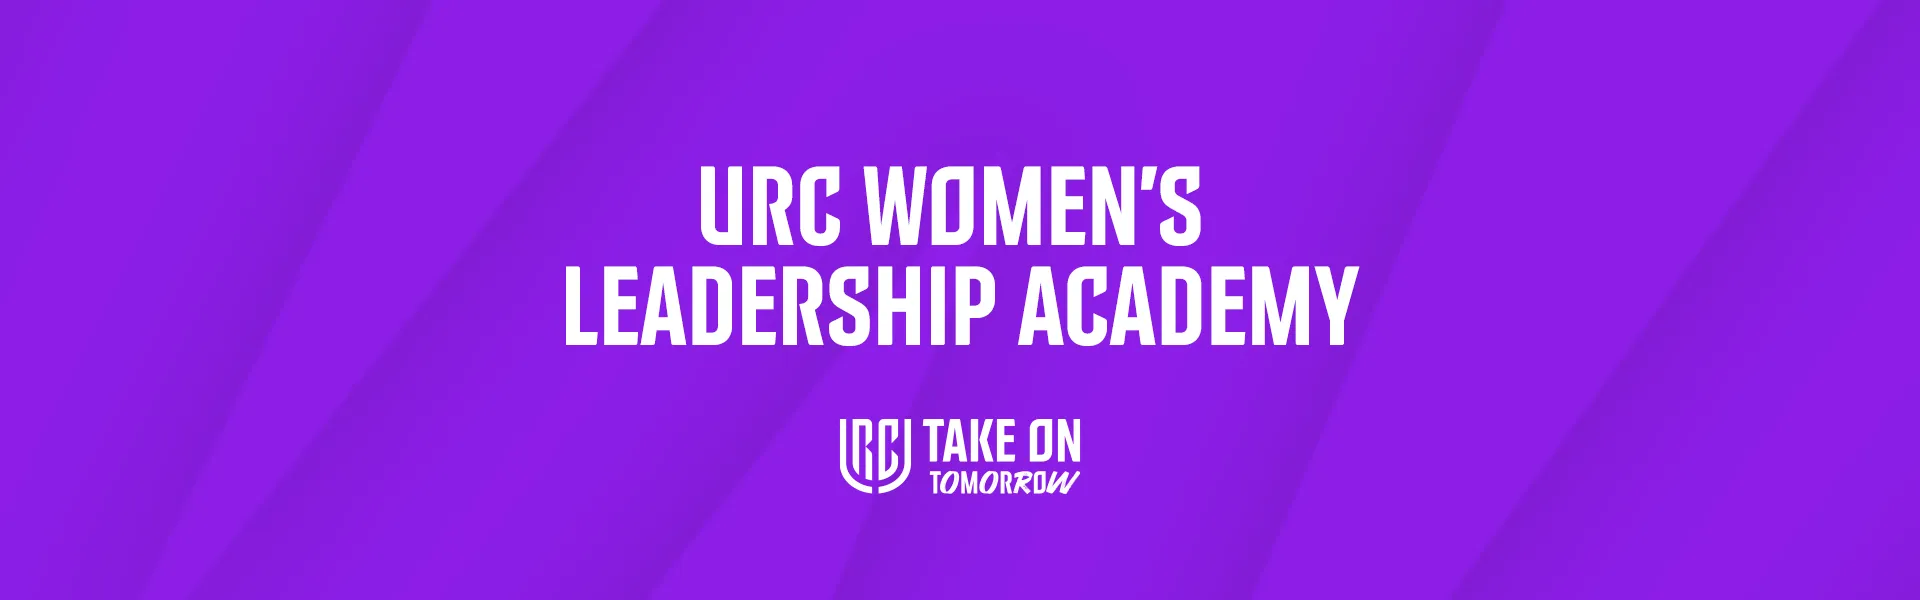 URC Announces Top Panel For Women’s Leadership Academy Workshops